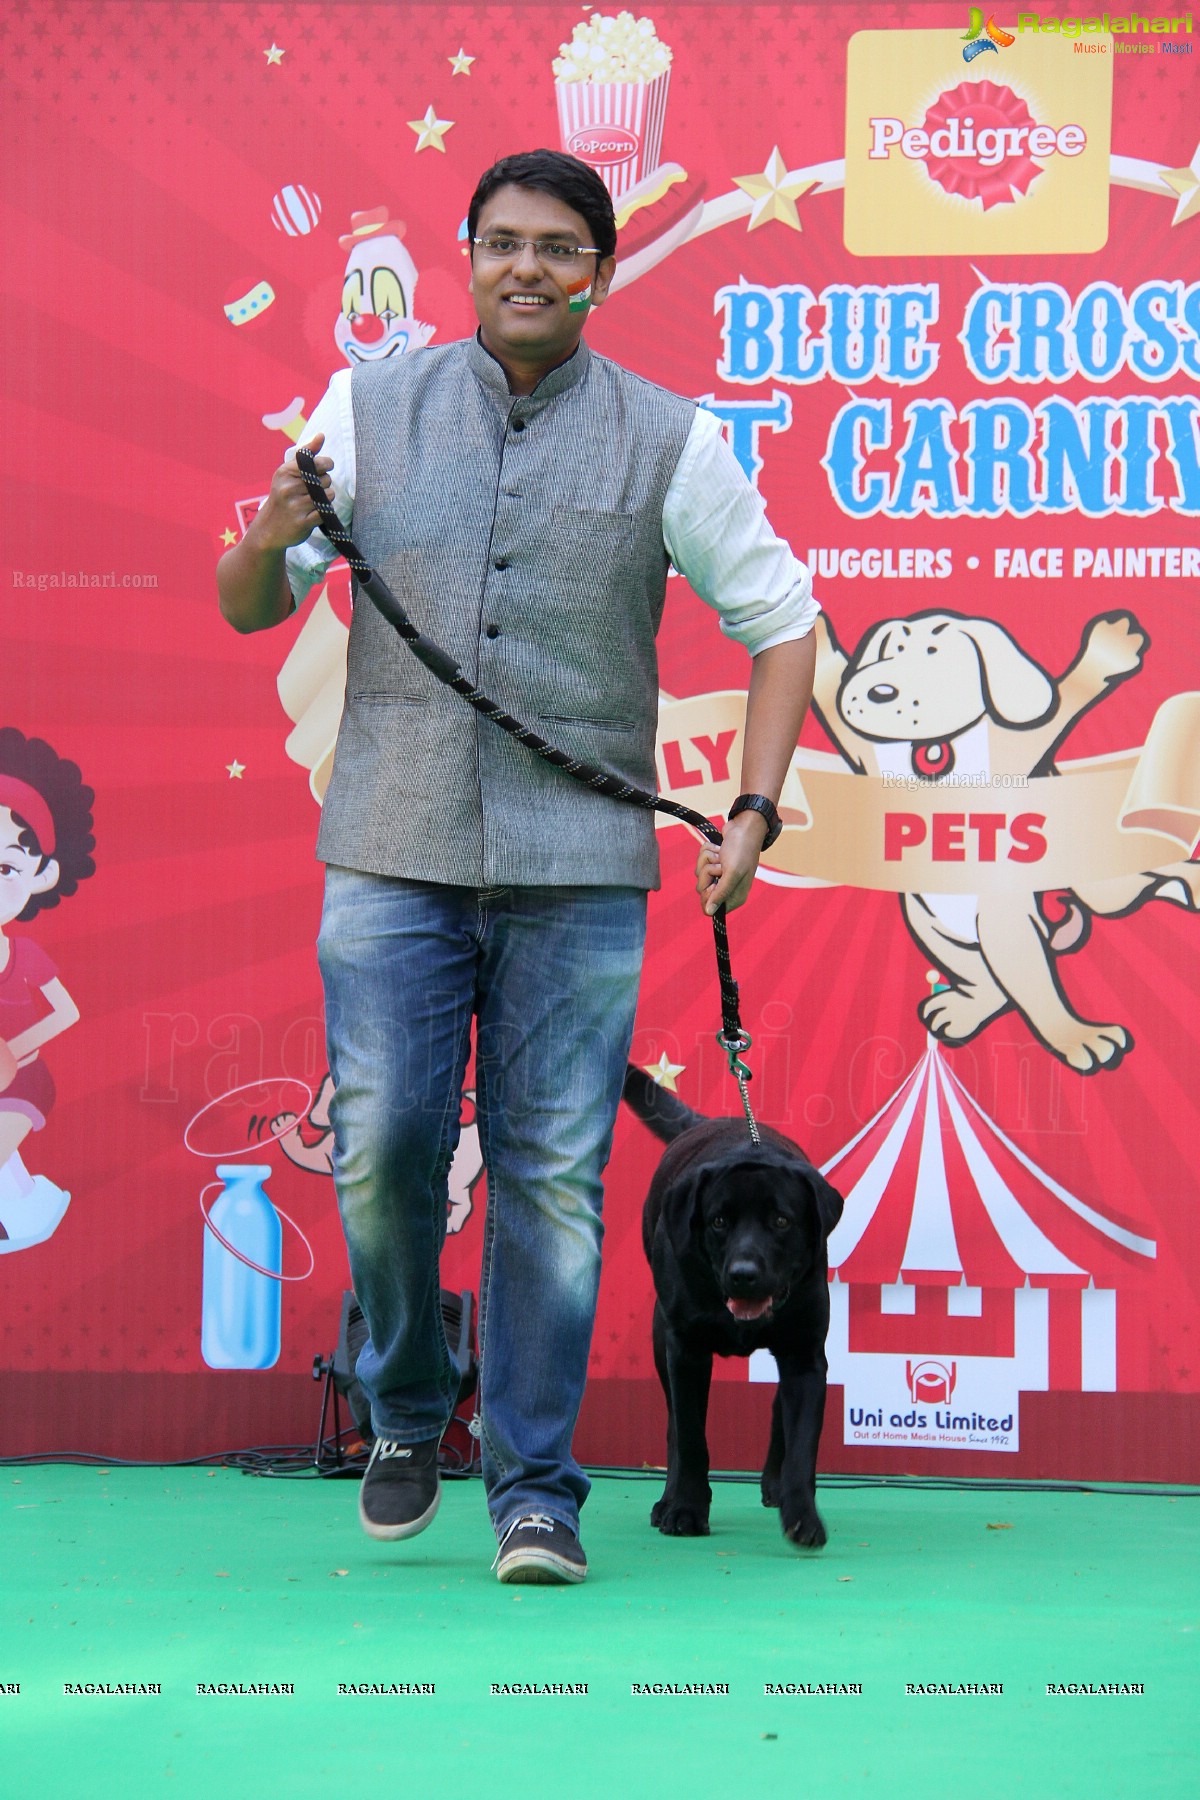 Pedigree Blue Cross Pet Carnival 2014 at N Convention